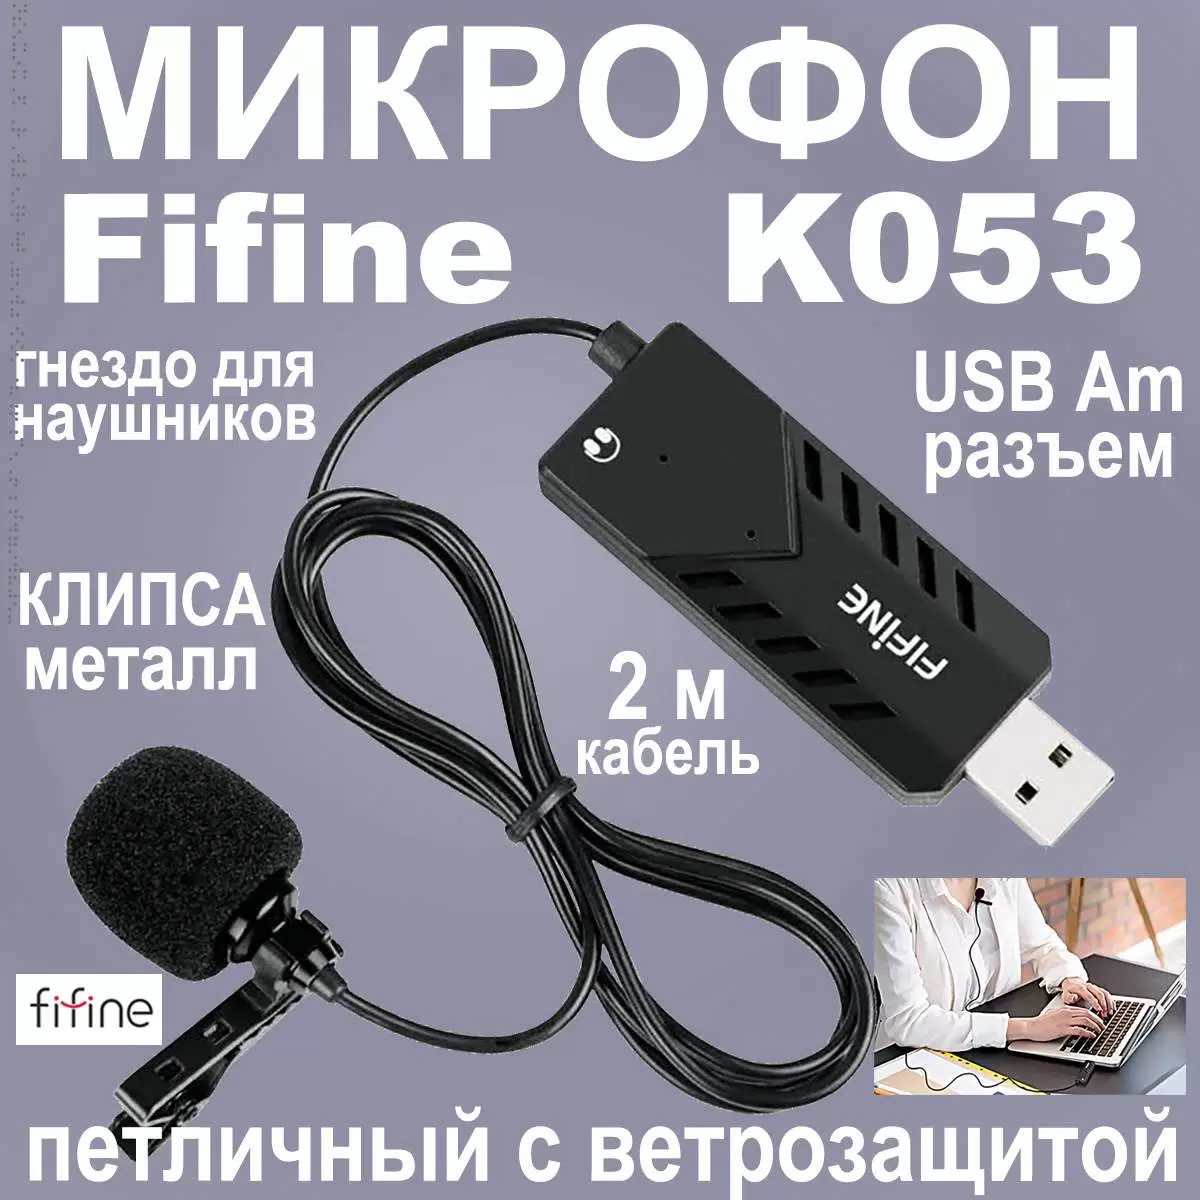 Микрофон Fifine K053 Black - VLARNIKA в Донецке